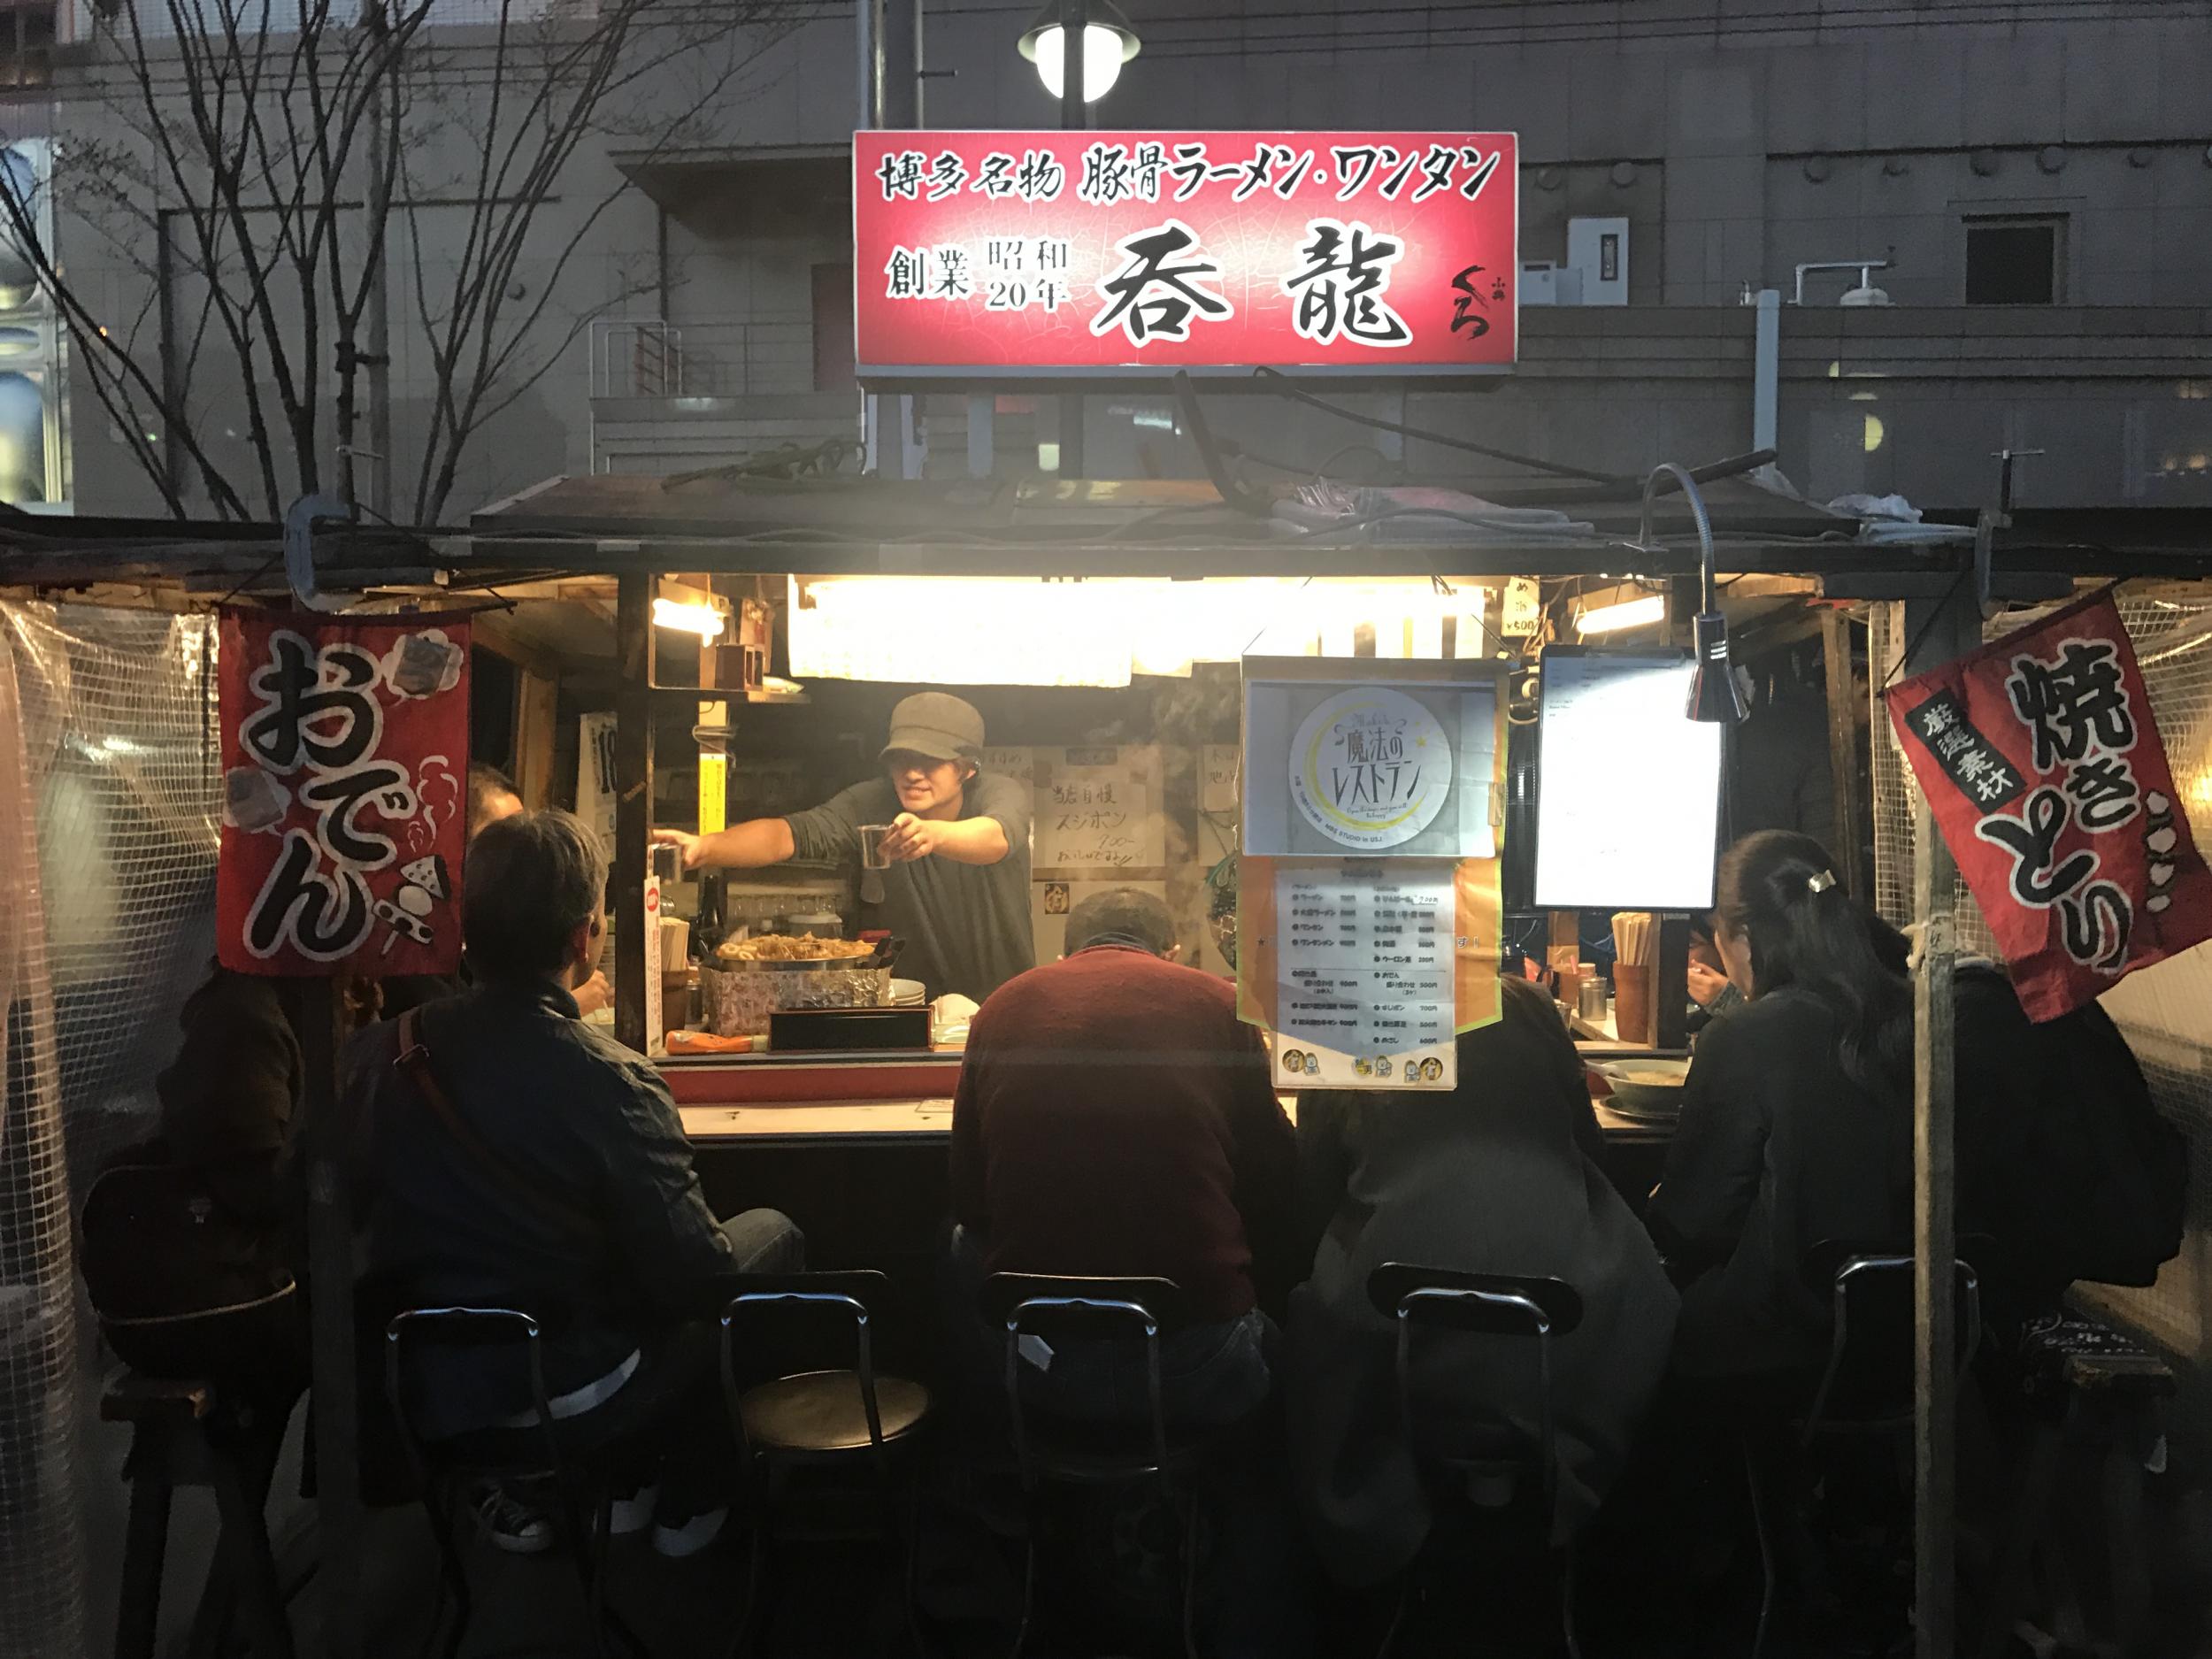 Yatai mobile street food huts emerge after dark